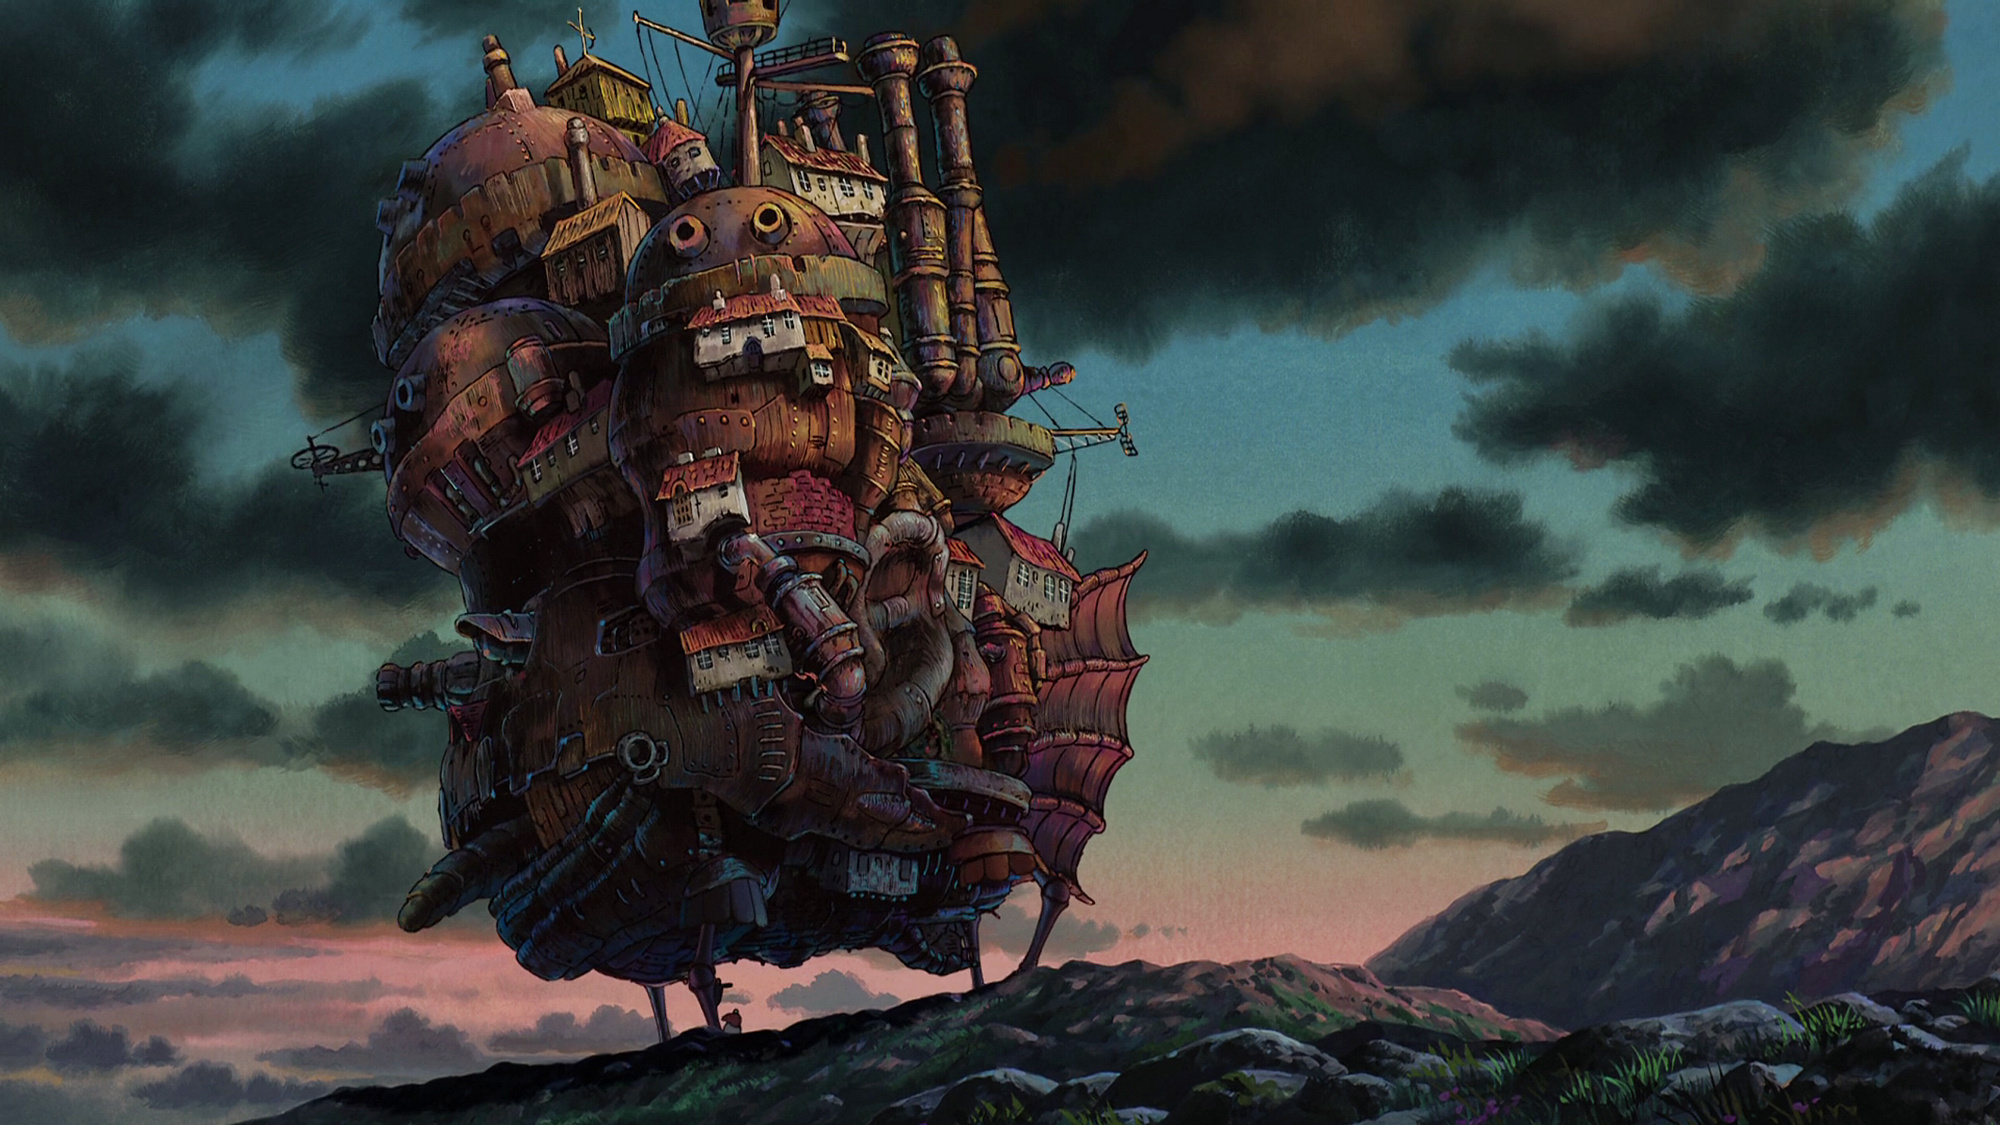 Studio Ghibli anime wallpapers, Ghibli movie wallpapers, Artistic backgrounds, Miyazaki masterpieces, 2000x1130 HD Desktop